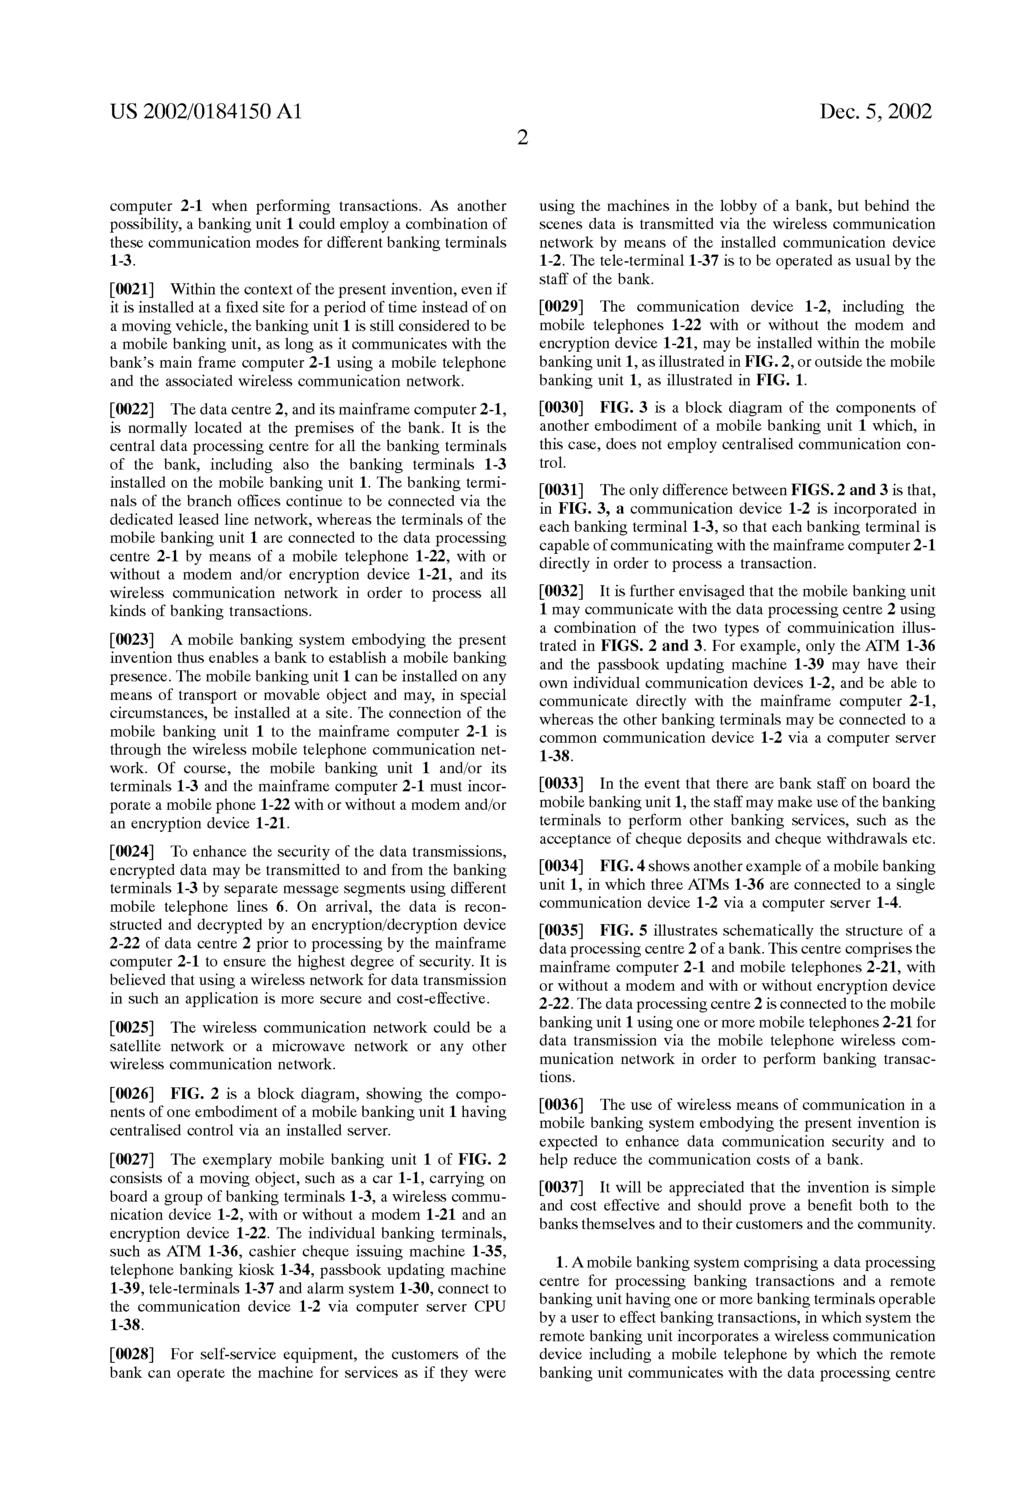 US 2002/0184150 A1 Dec. 5, 2002 computer 2-1 When performing transactions.